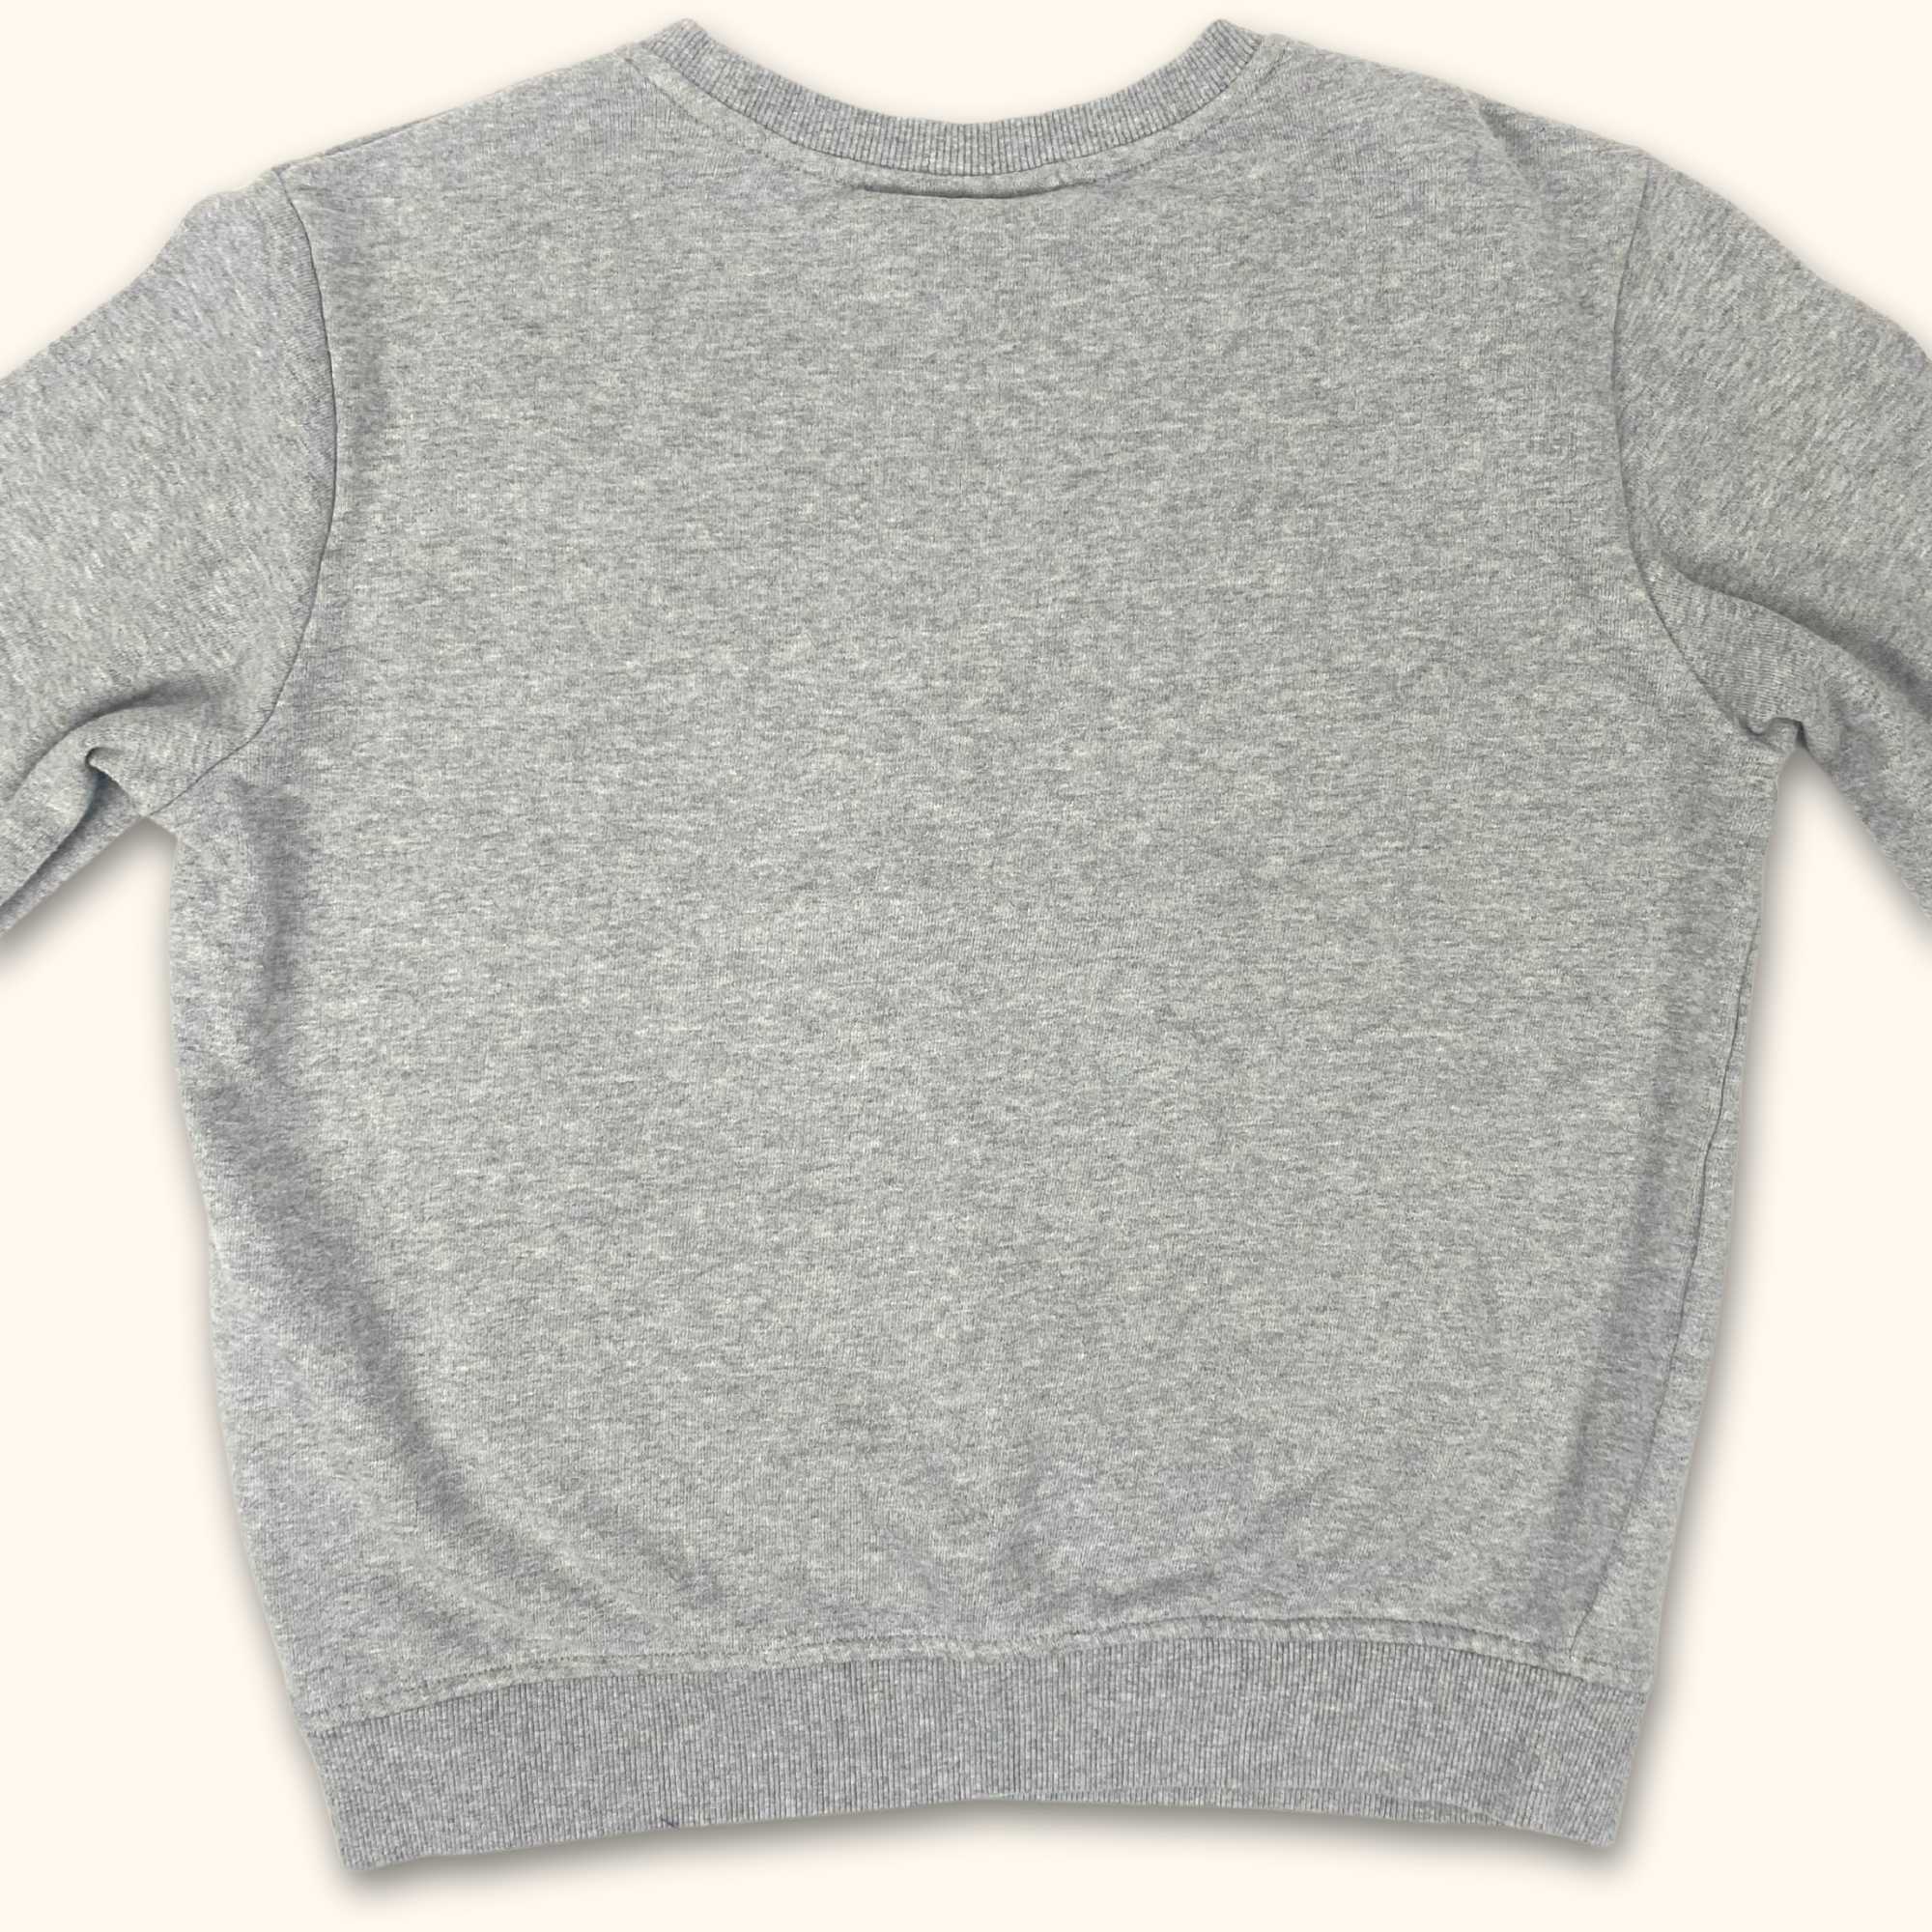 Fila Grey Long Sleeve Sweatshirt - Size Small - Fila - Jumpers